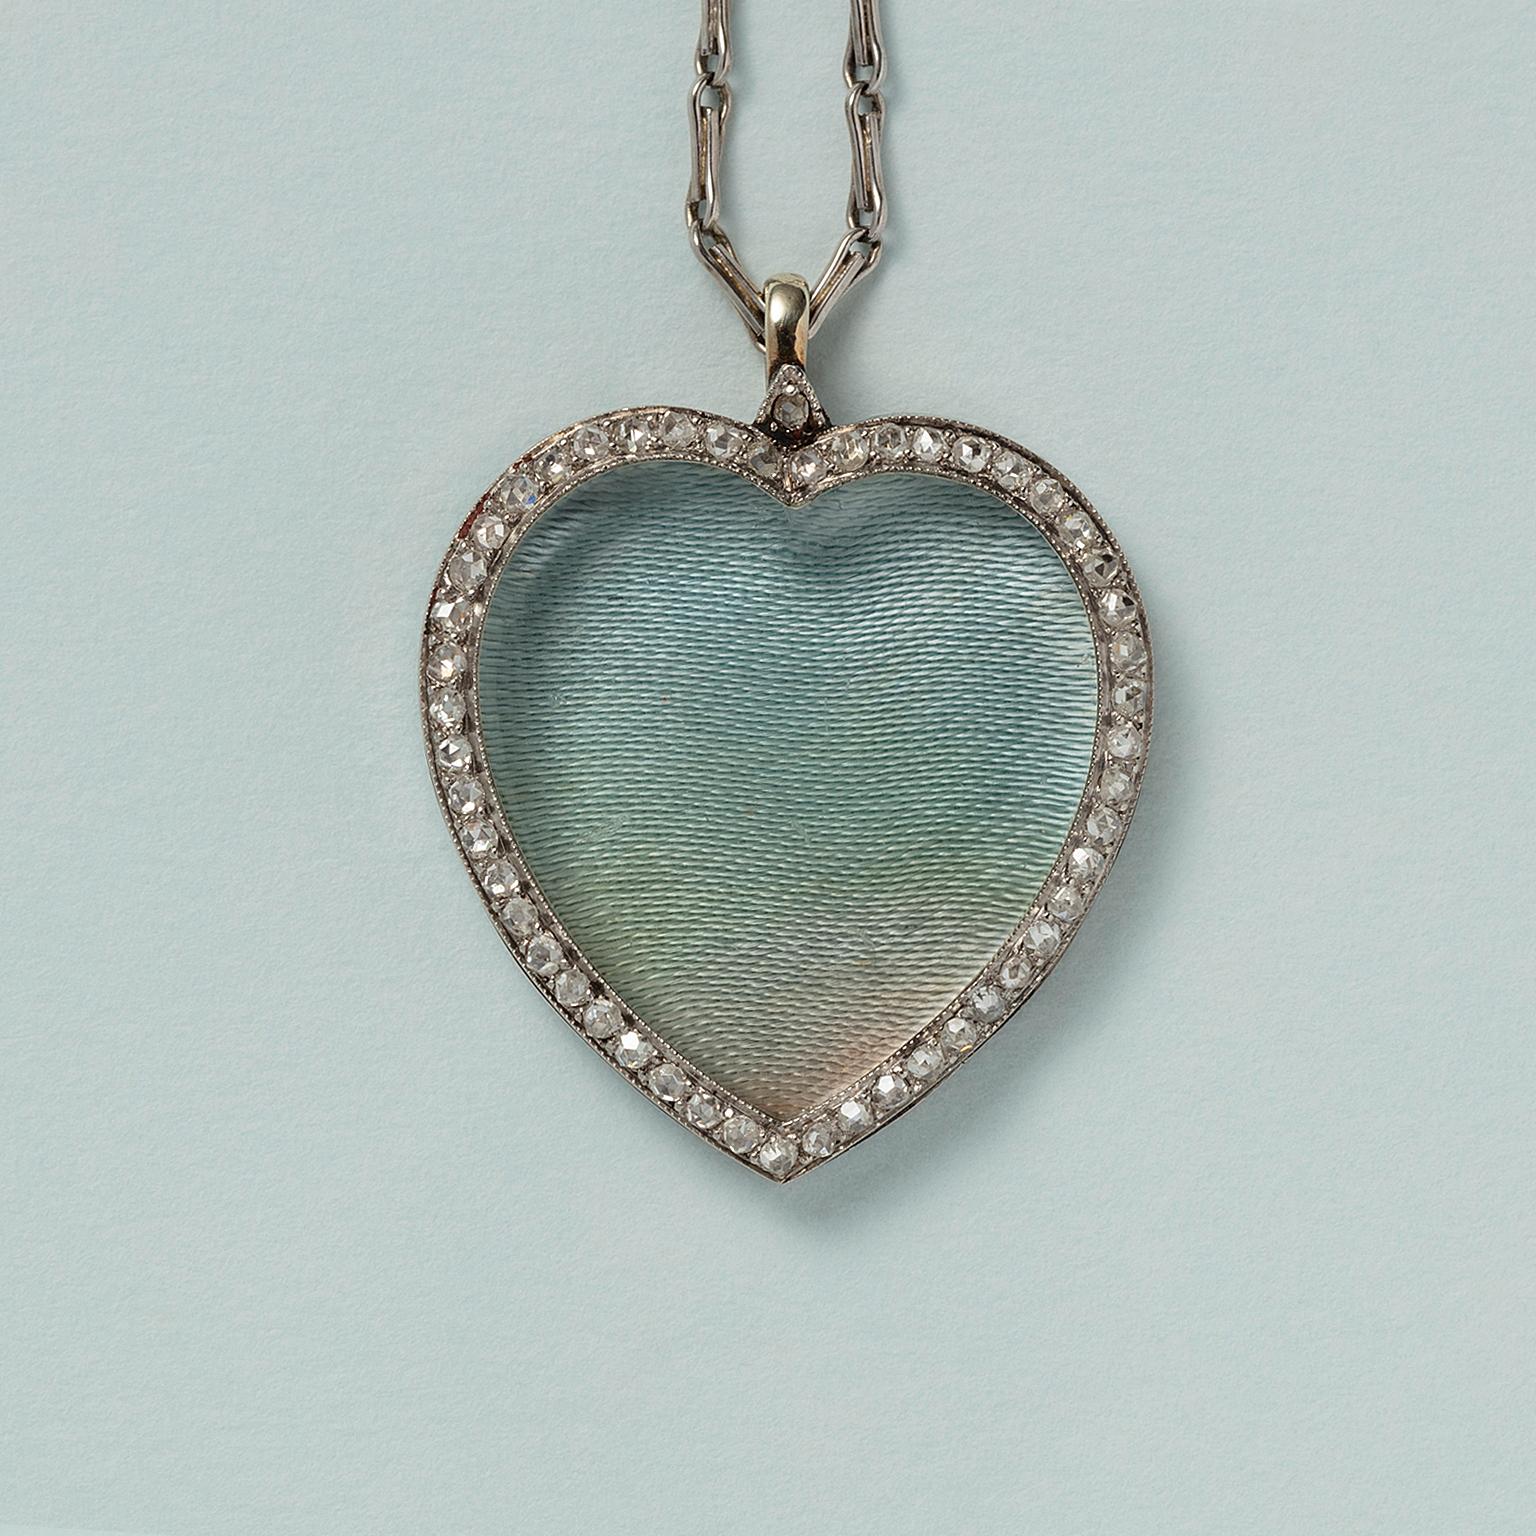 An Edwardian platinum heart shaped locket with a border set with rose cut diamonds (app. 0.6 carat), circa 1910.

weight: 9.3 grams
dimensions: 2.8 x 2.7 cm